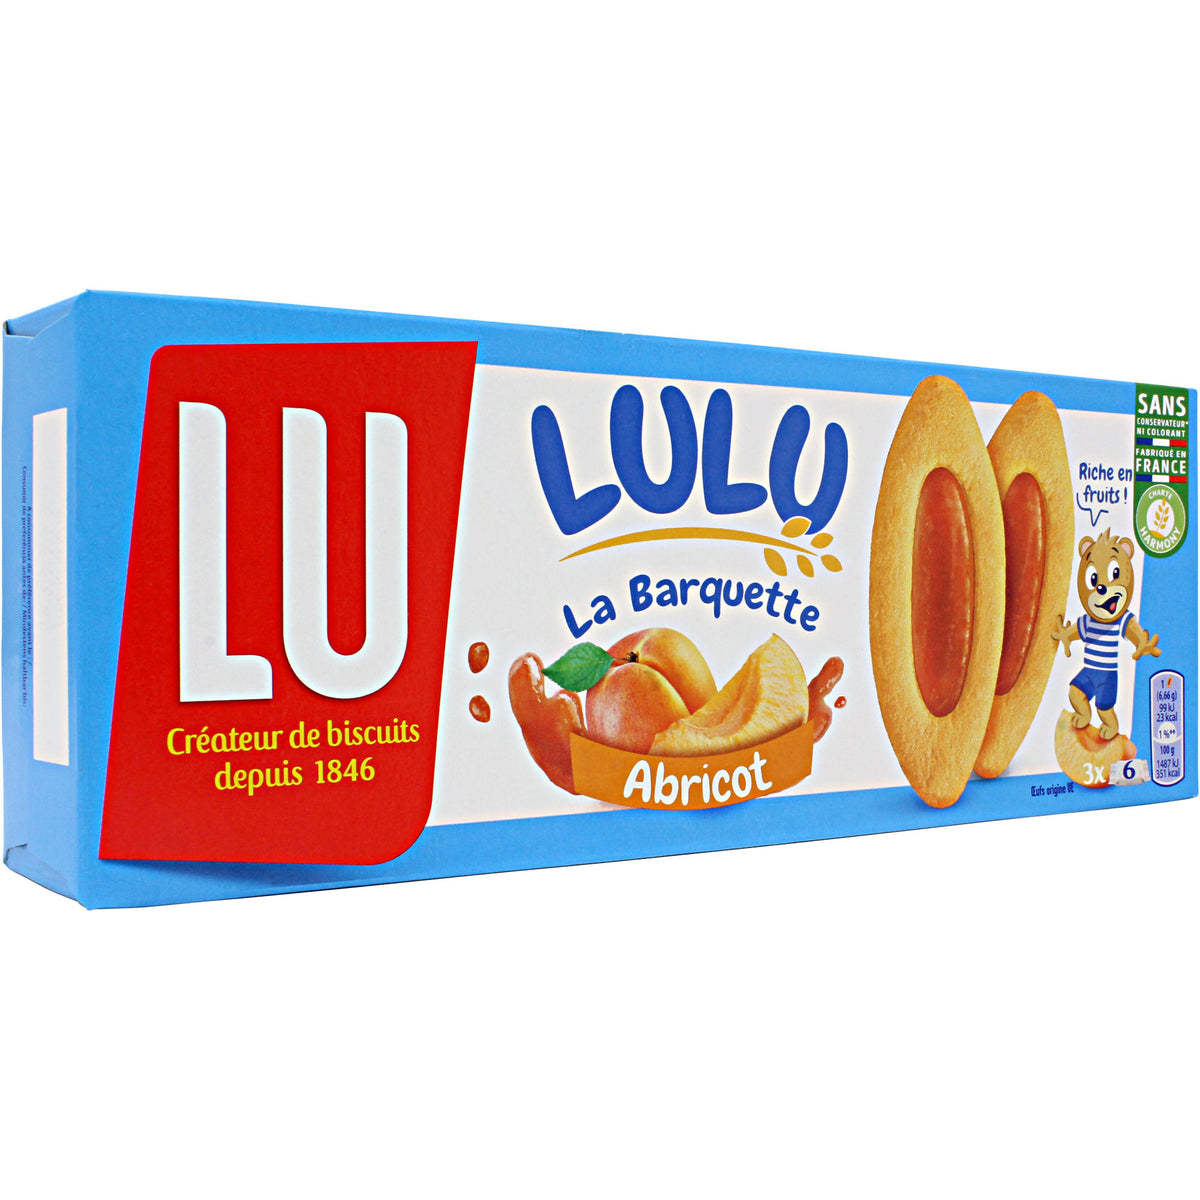 Biscuit Lulu La Barquette Chocolat Noisettes LU 120Grs - Drive Z